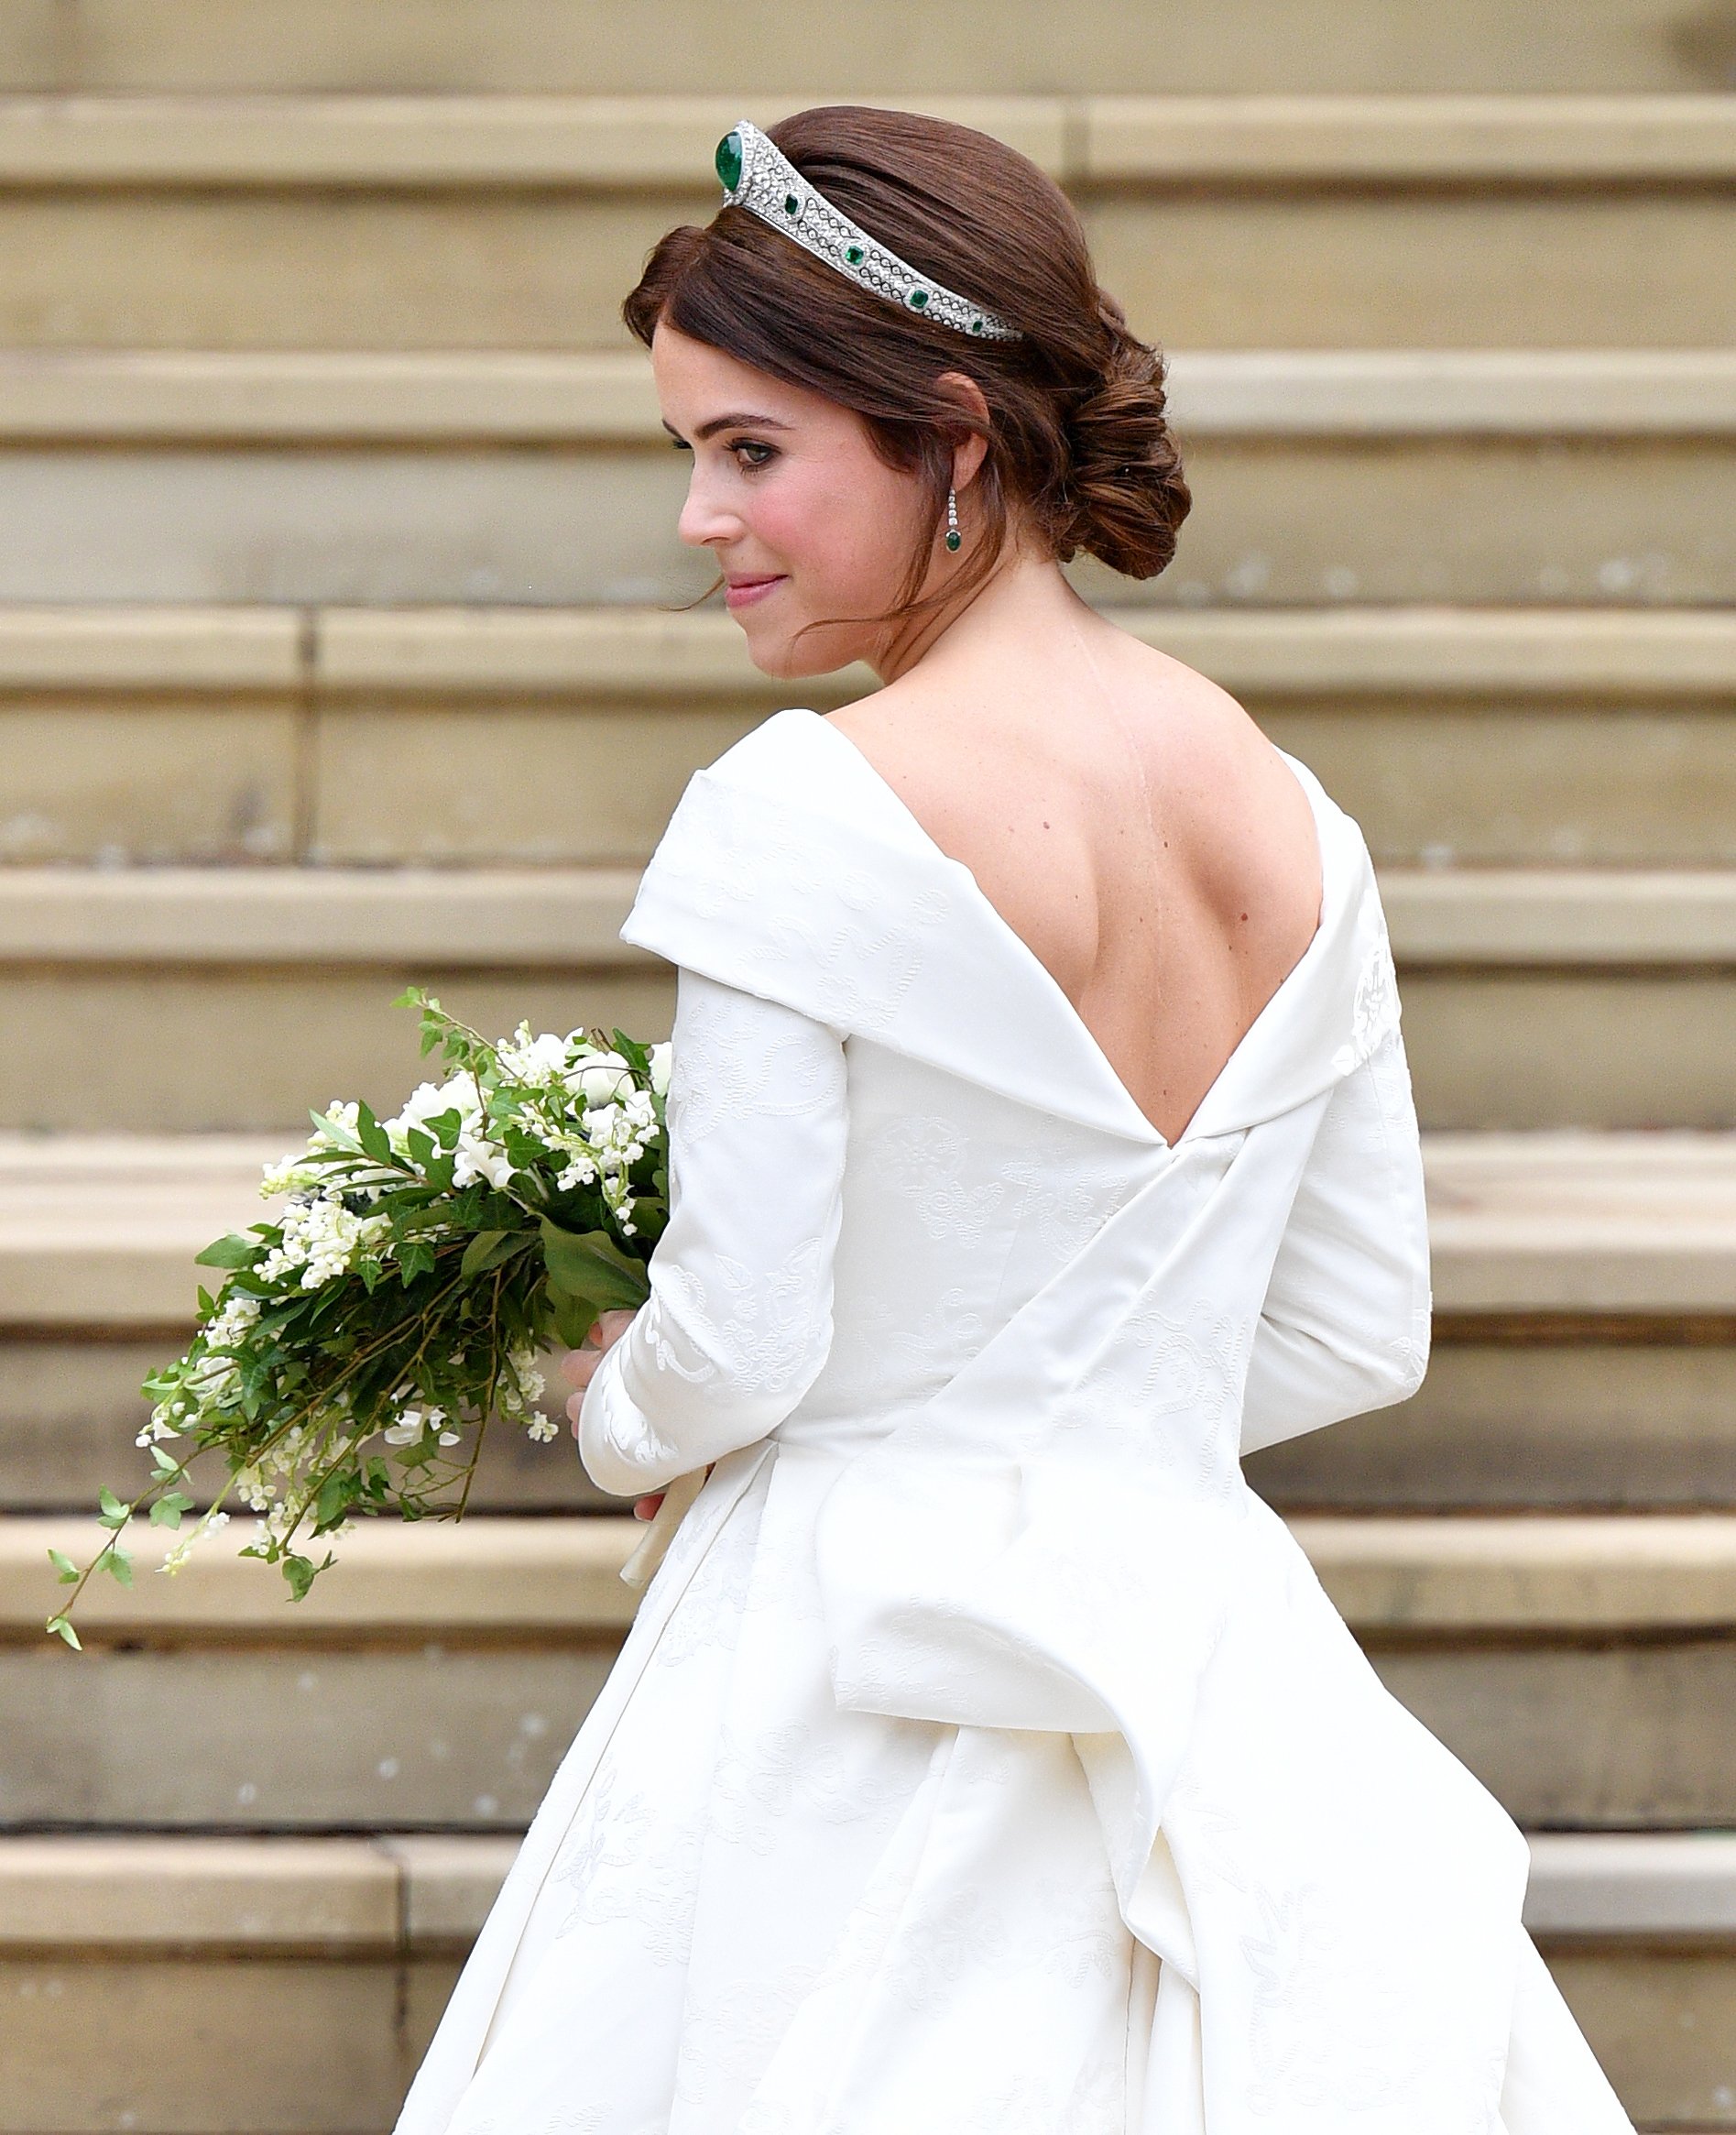 La princesa Eugenia llega a la Capilla de San Jorge antes de la ceremonia de boda de Jack Brooksbank y ella el 12 de octubre de 2018 en Windsor, Inglaterra. | Foto: Getty Images